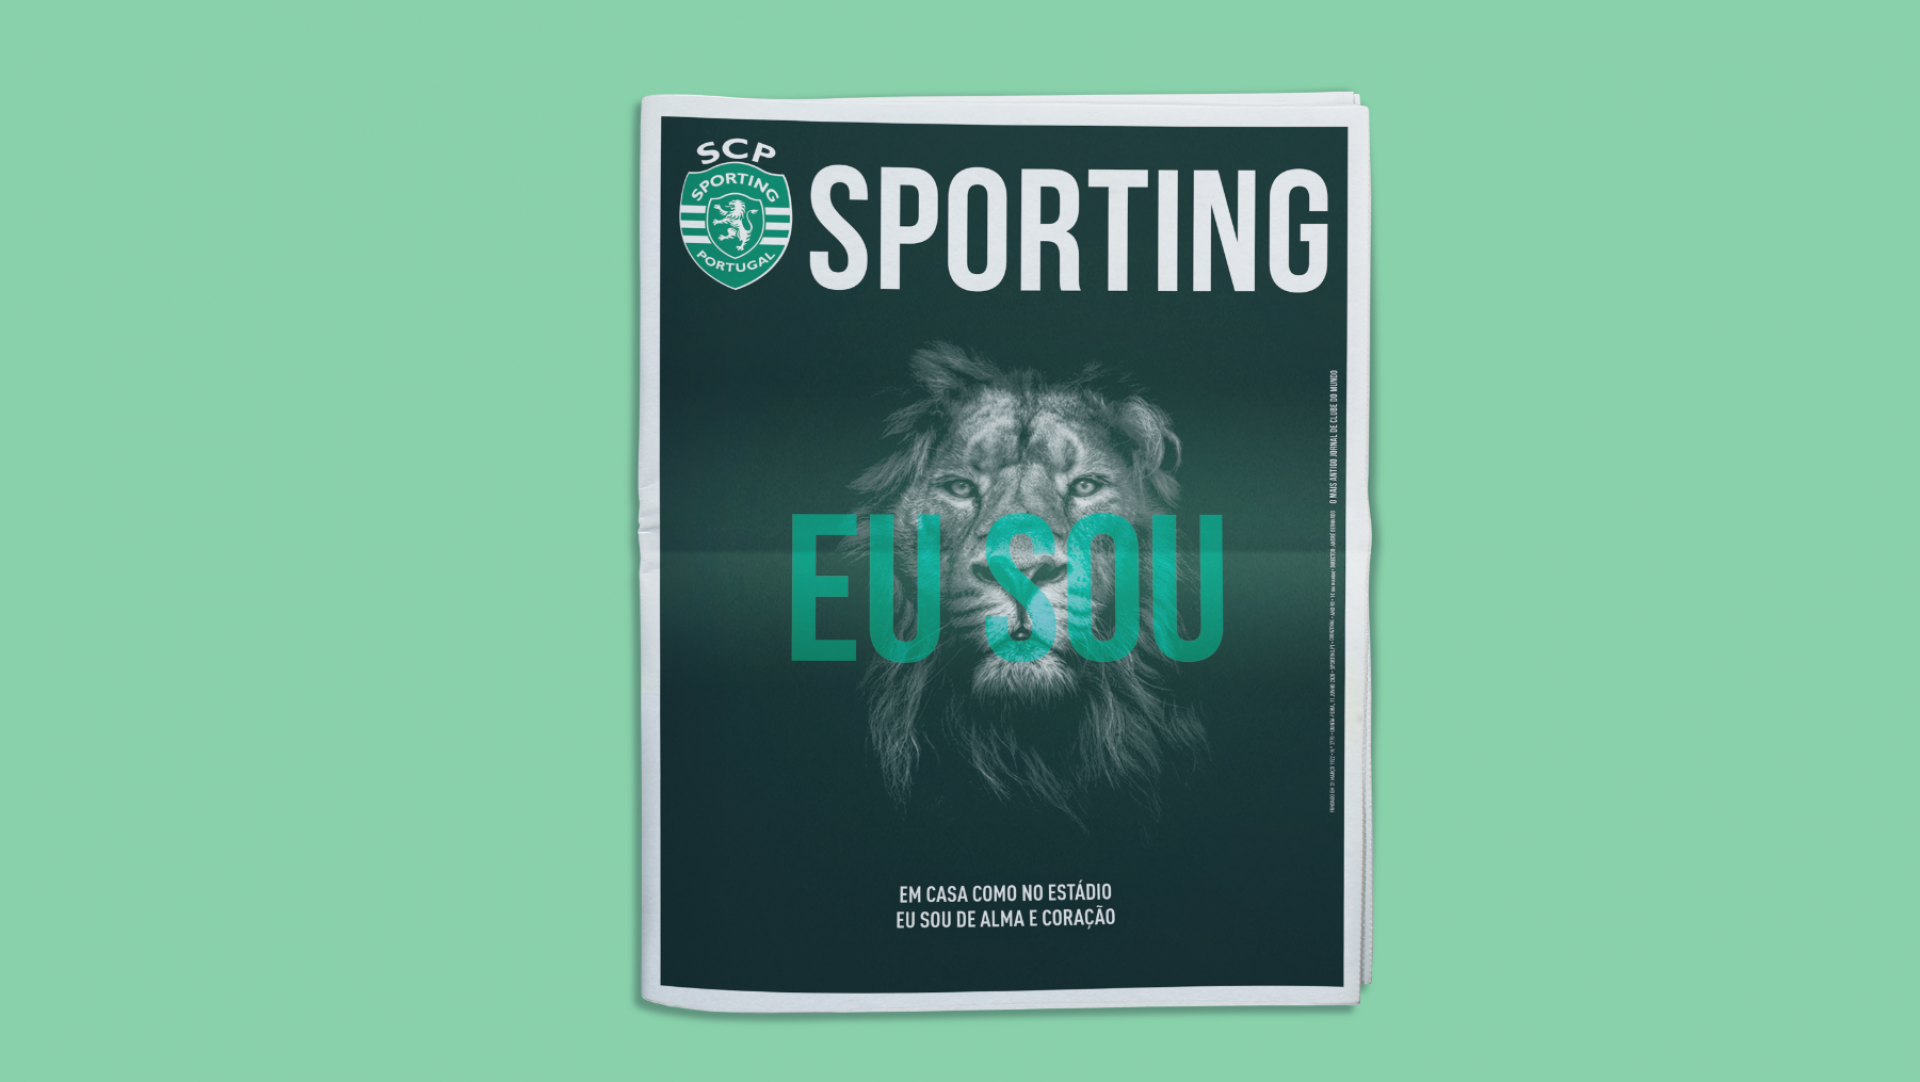 SCP - Sporting Clube de Portugal - Professional services